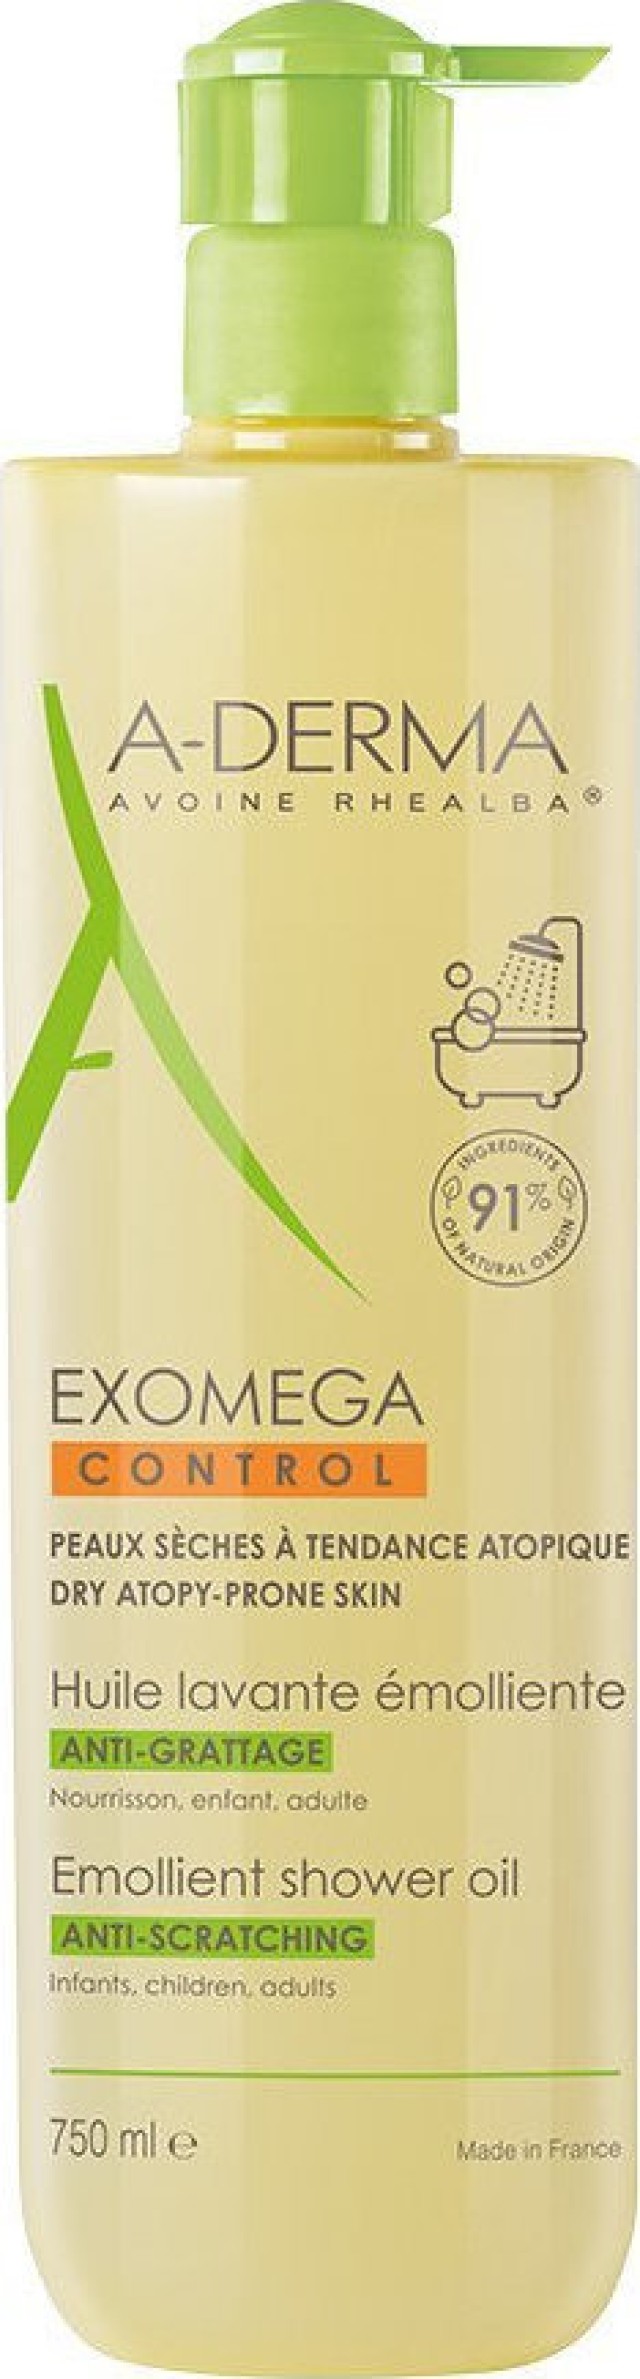 A-Derma Exomega Control Emollient Shower Oil Μαλακτικό Λάδι Καθαρισμού για Ατοπικό Δέρμα, 750ml